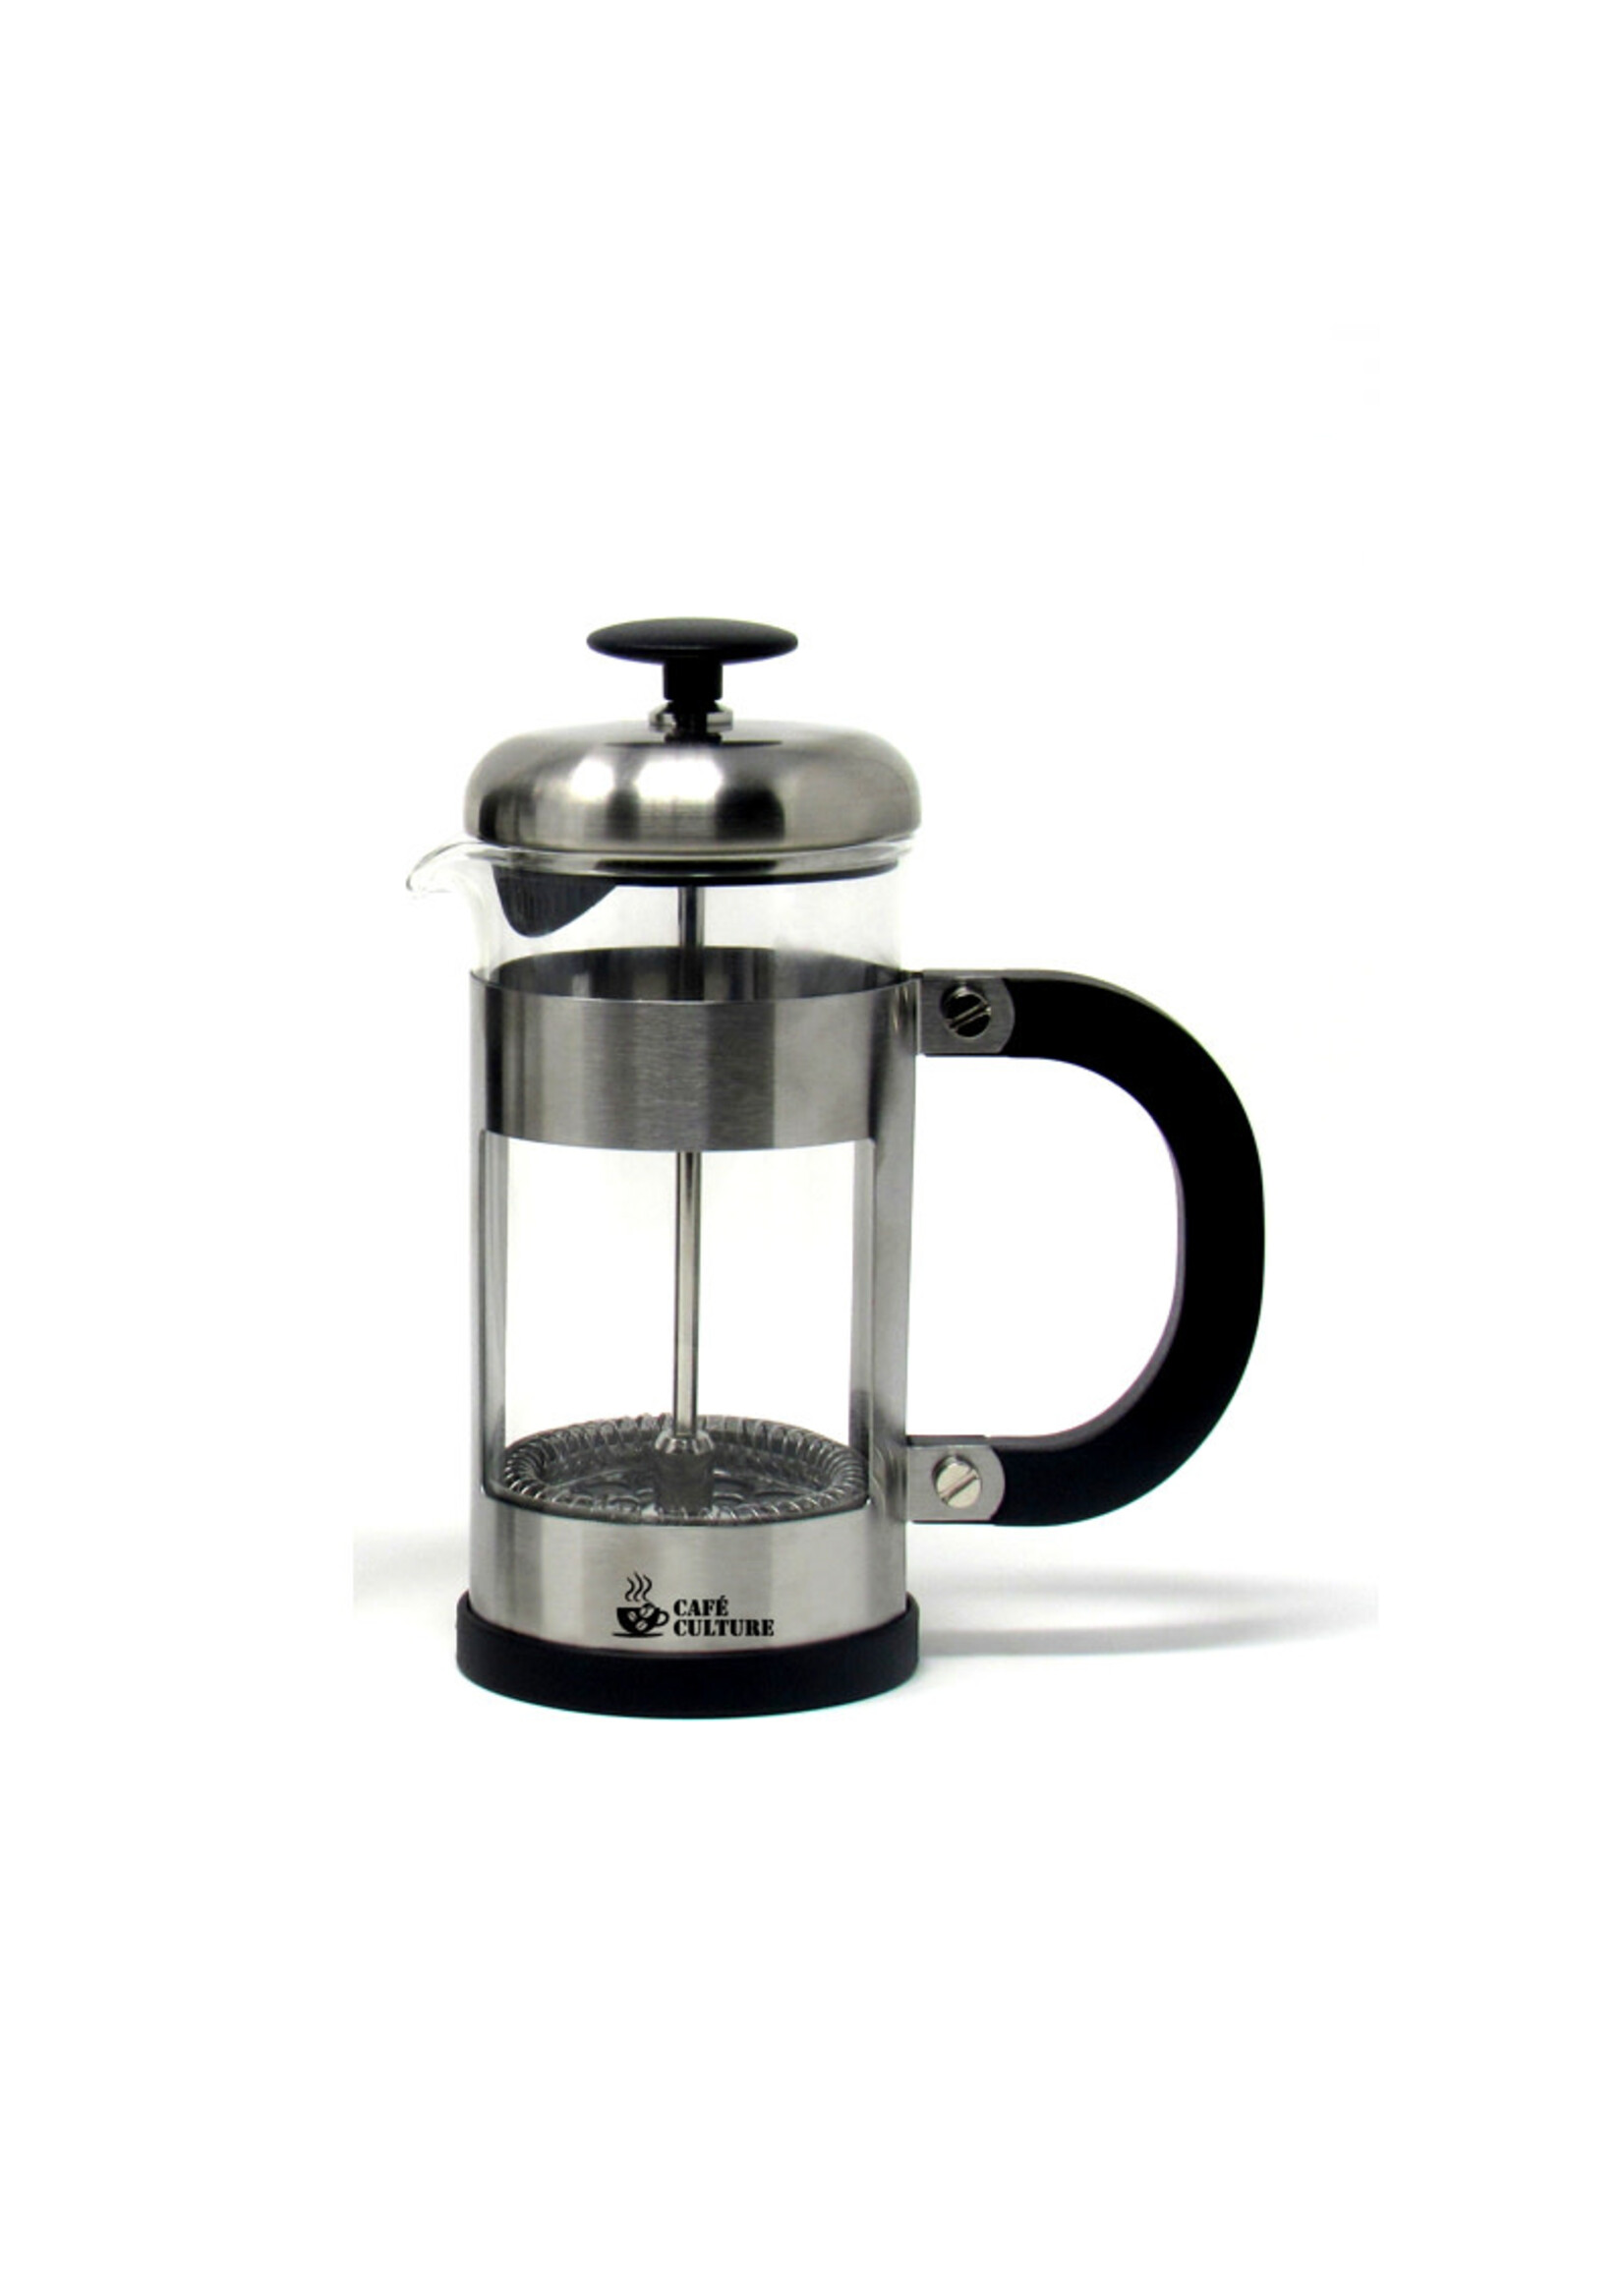 Danesco 3-Cup Coffee Press